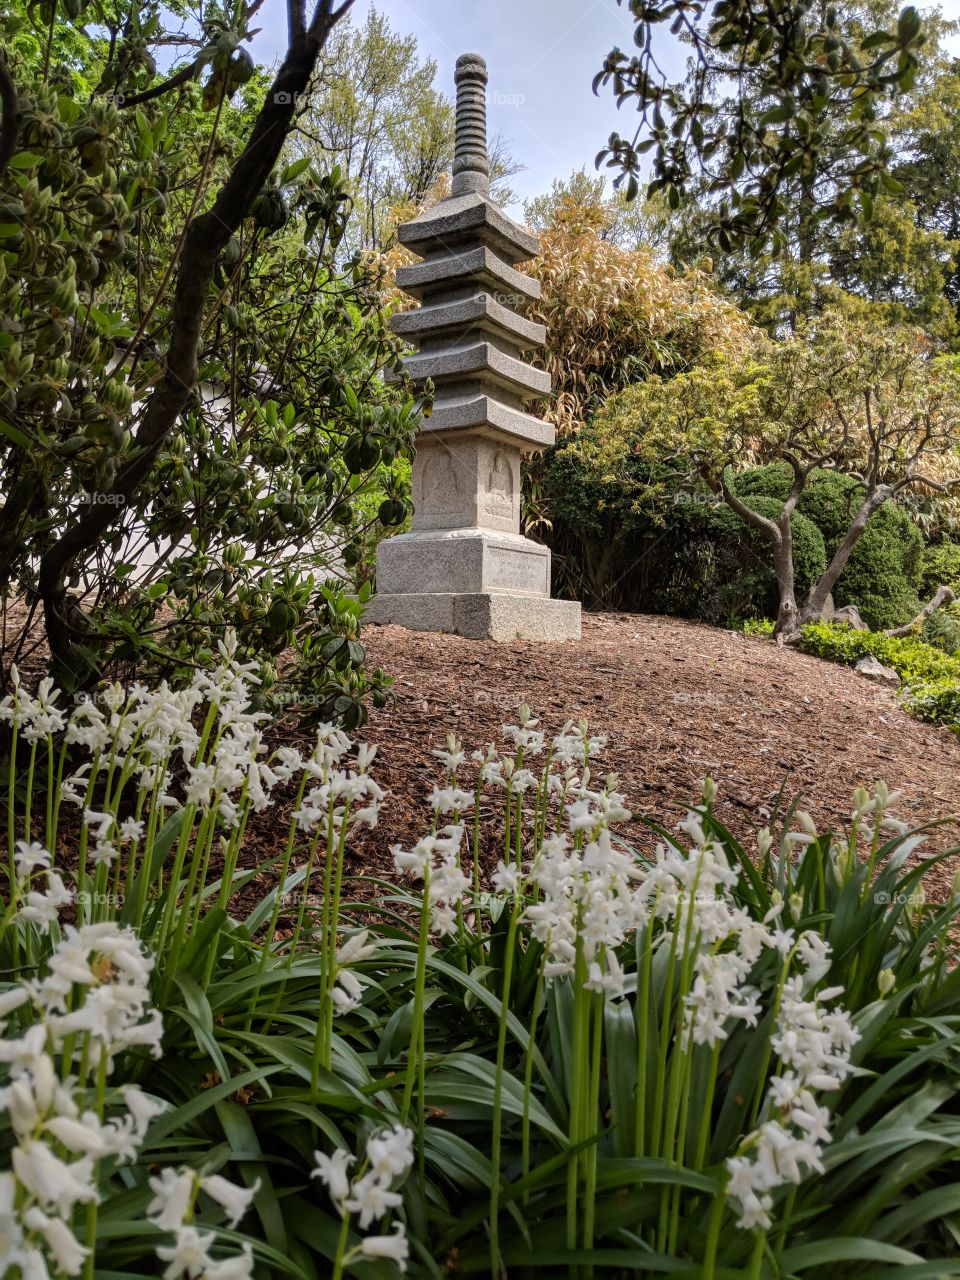 Antique Japanese stone monument amount lush greenery and flowers.